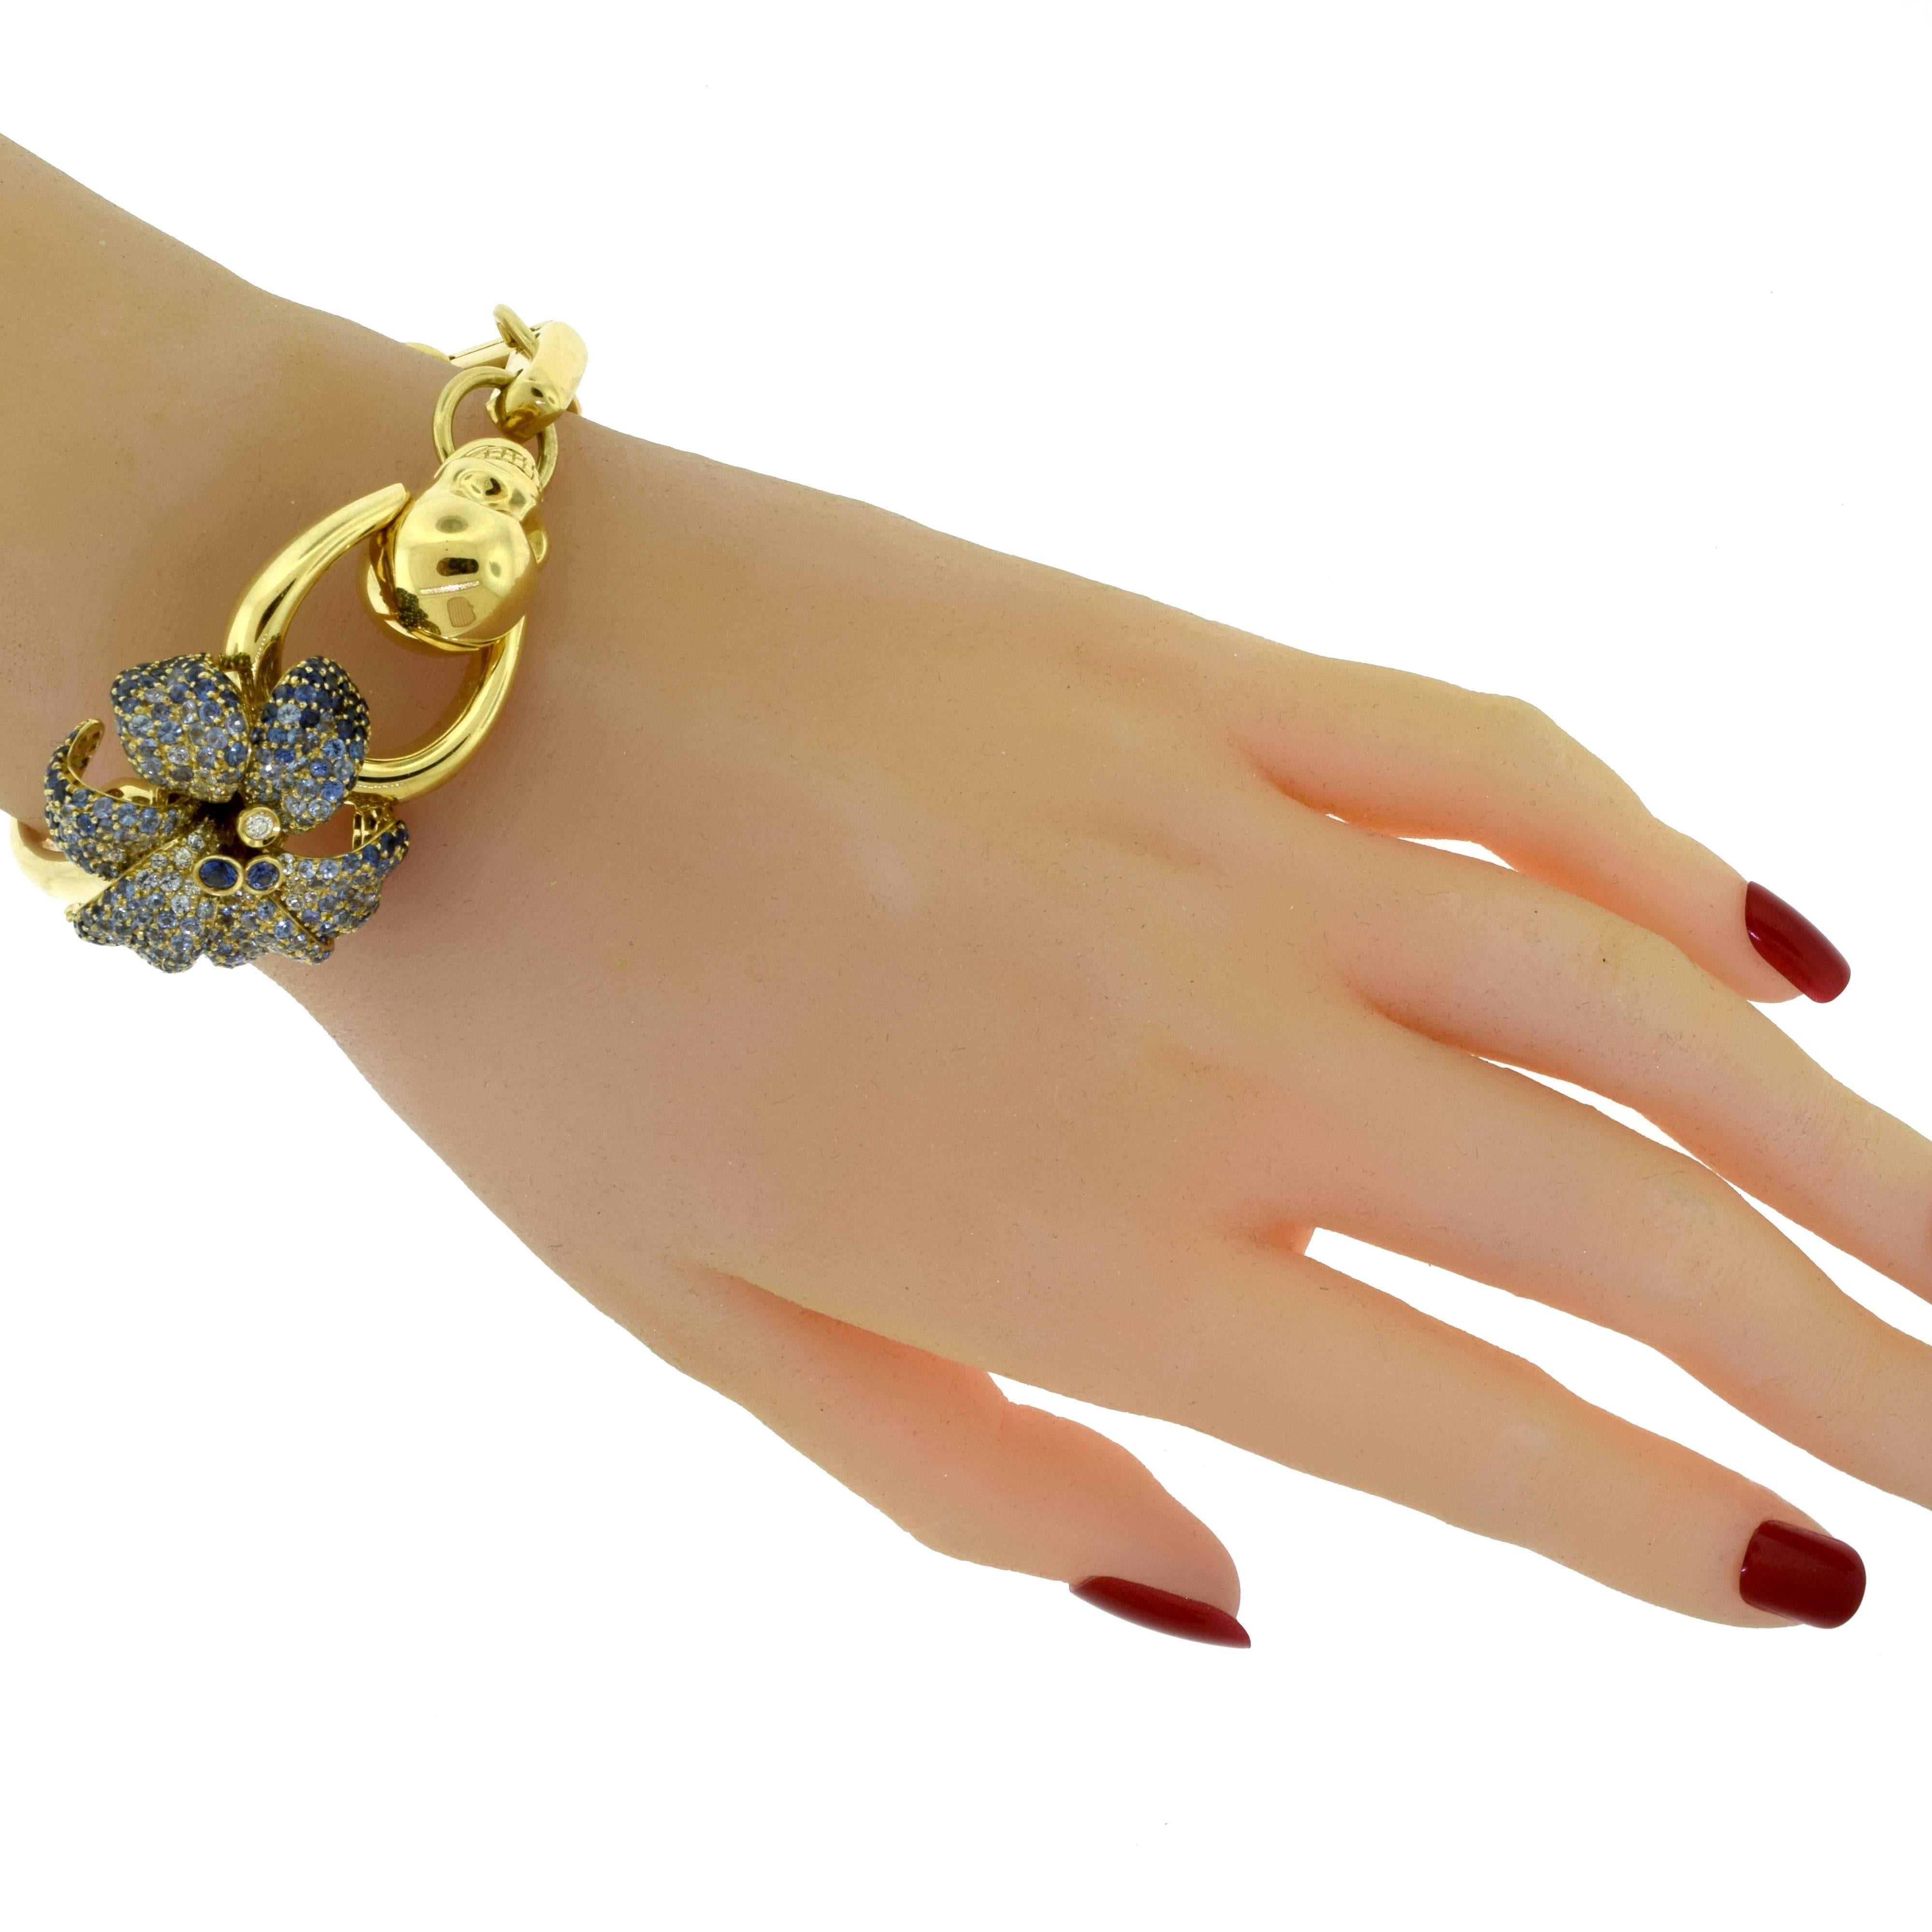 Designer: Gucci
Collection: Flora
Metal: 18 Karat Yellow Gold
Stones: Sapphires weighing 7.29 ct
Diamonds weighing 0.05 ct
Bracelet Size: 17 = 17 cm
Flora Dimensions: 1.00 x 1.25 inches
Skull Dimensions:  0.75 x 0.5 inchs
Total Item Weight (g):